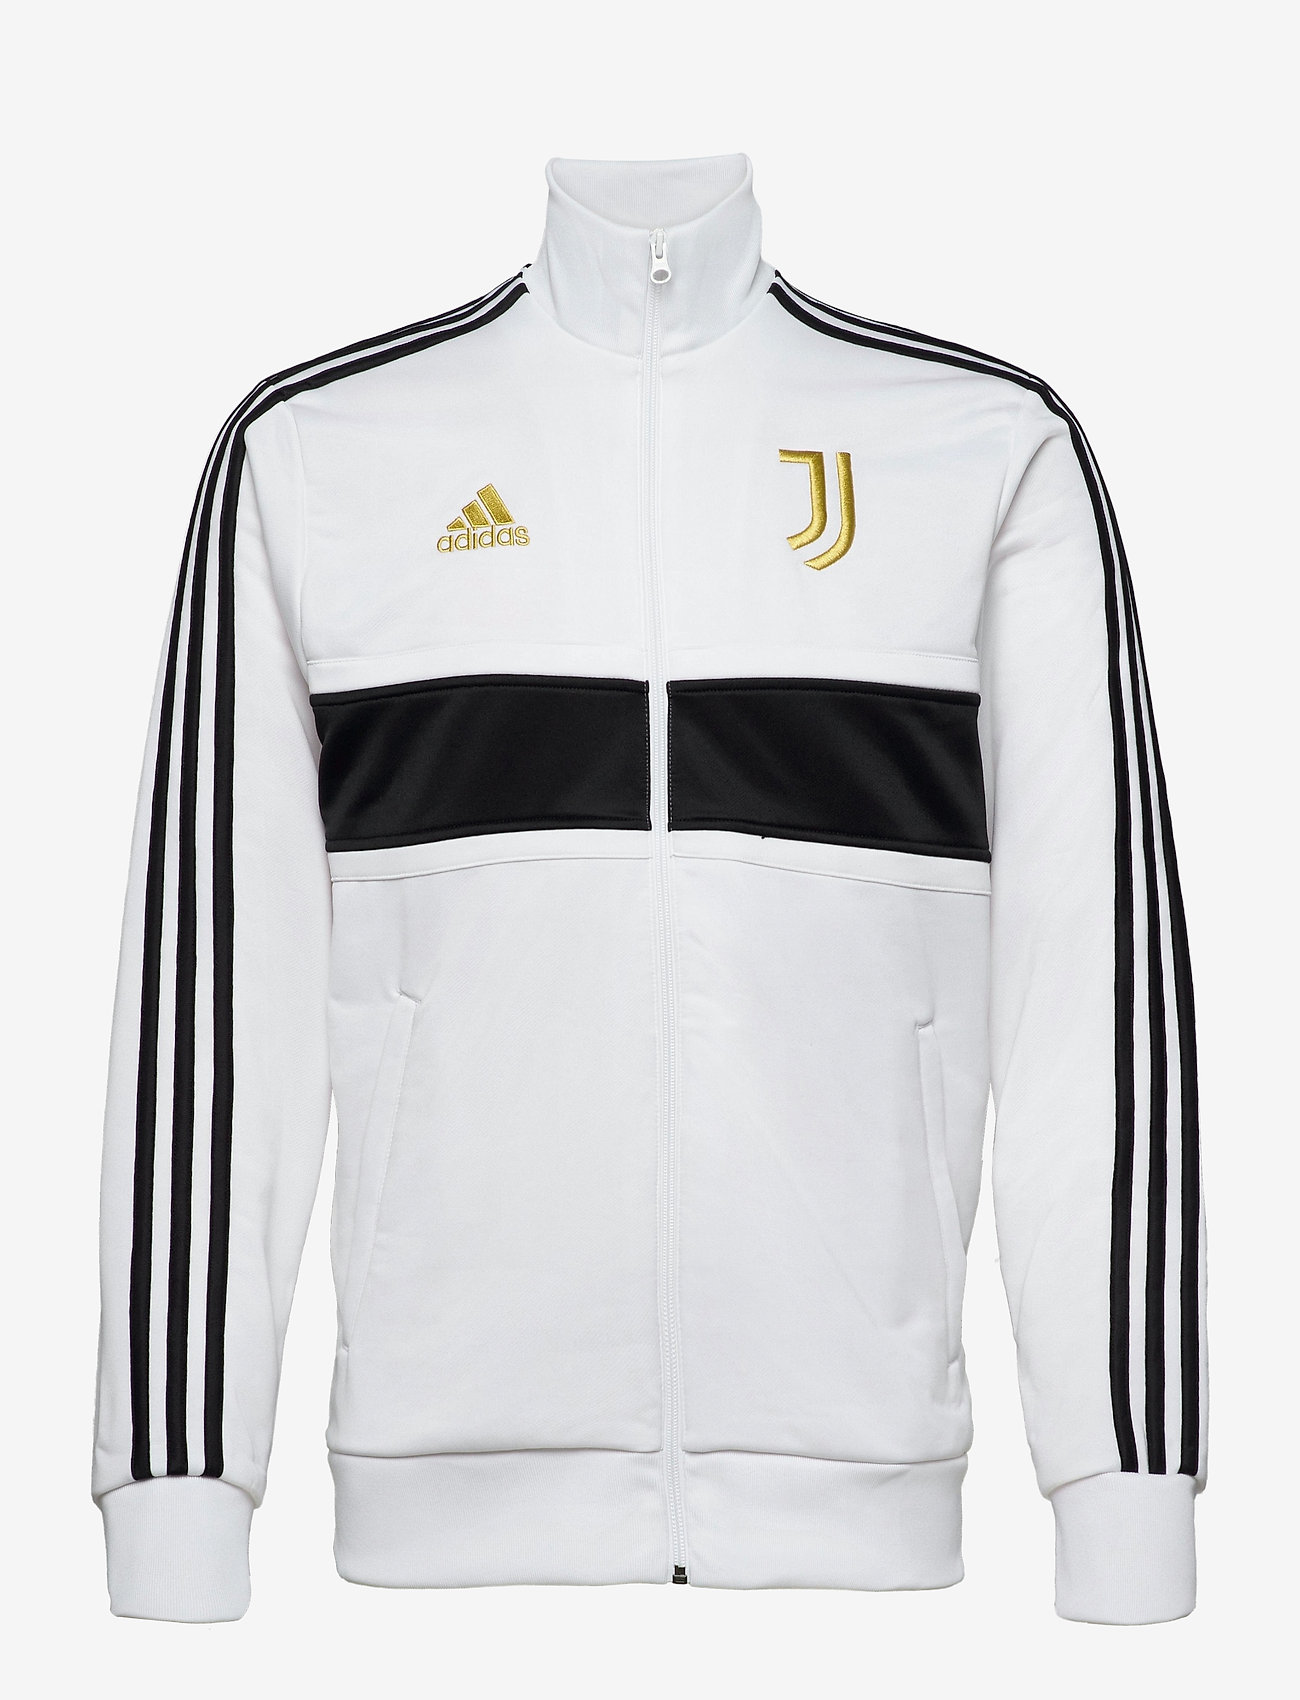 Juventus Track Top (White/black/pyrite) (64.95 €) - adidas Performance - |  Boozt.com